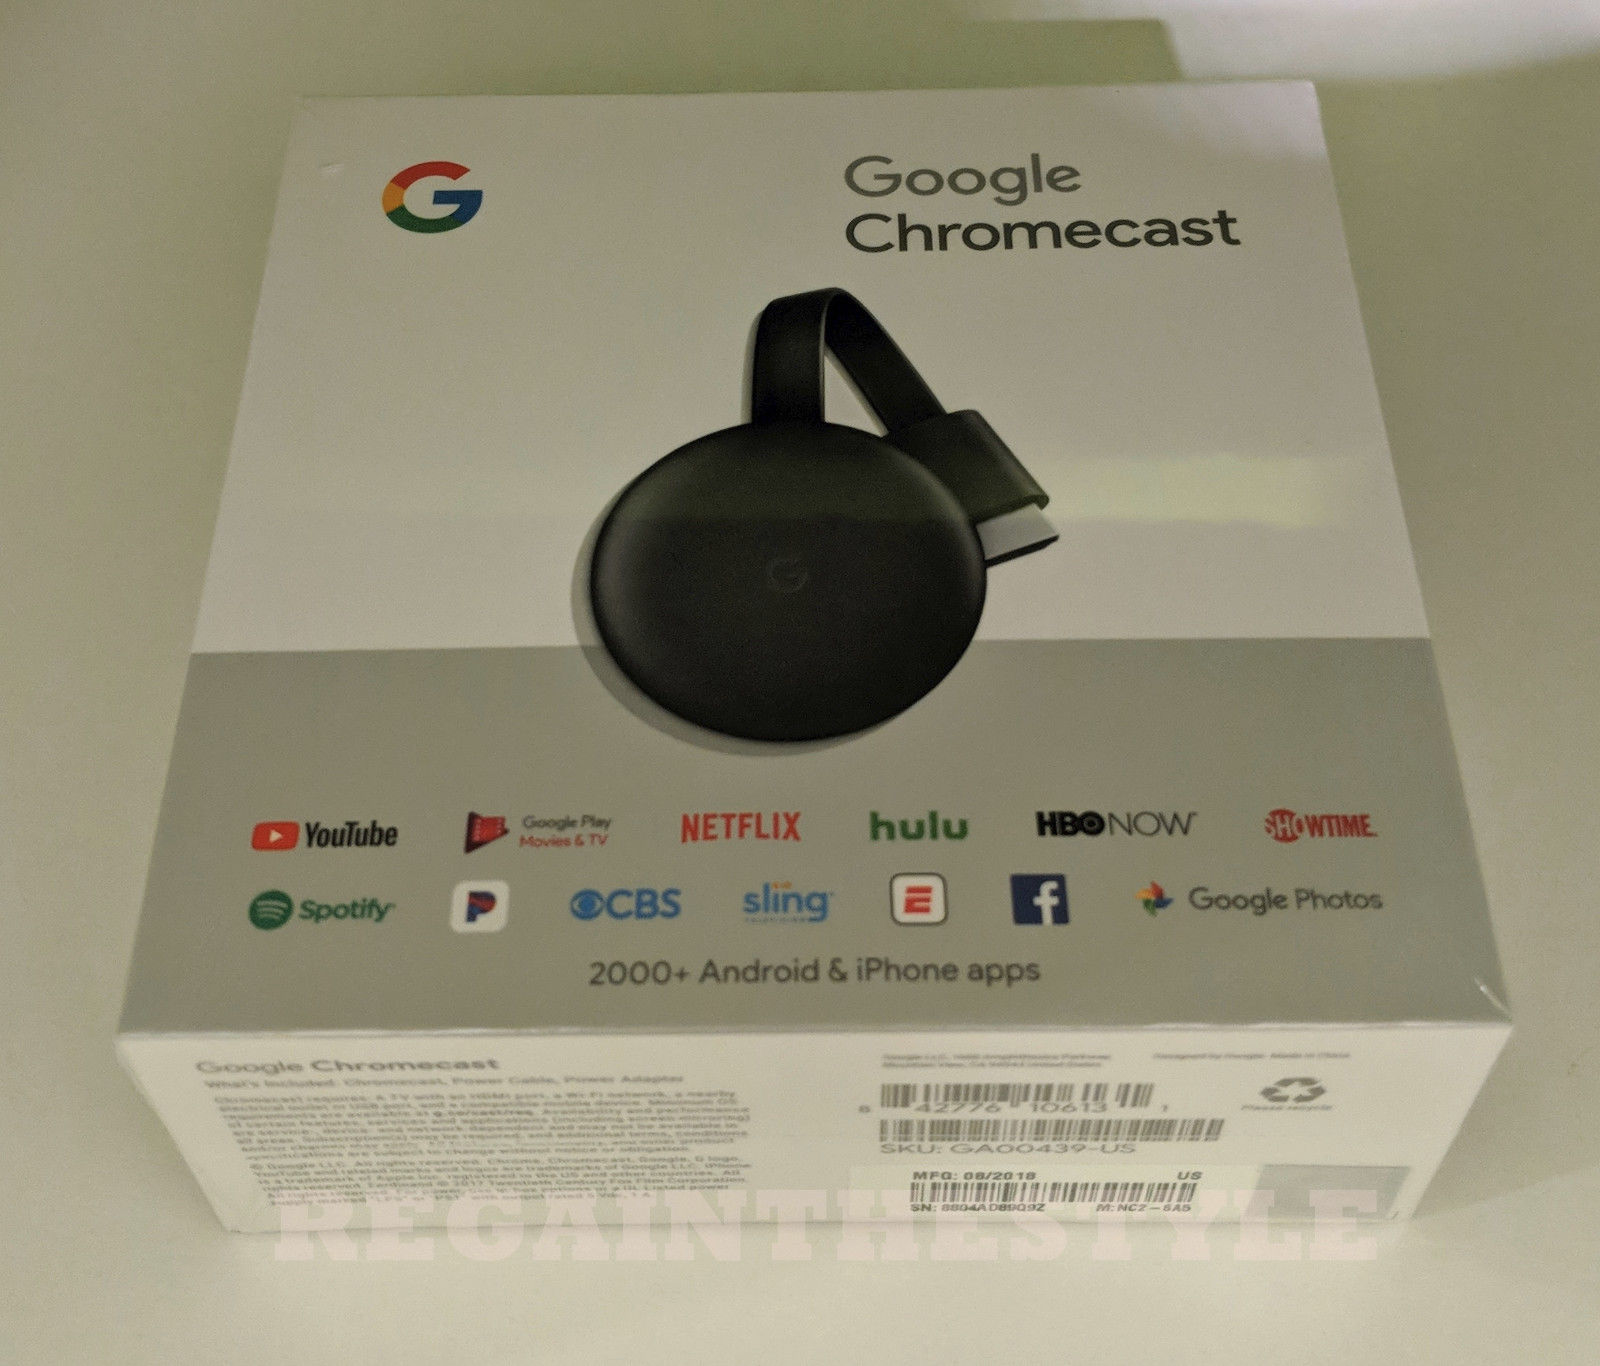 chromecast device